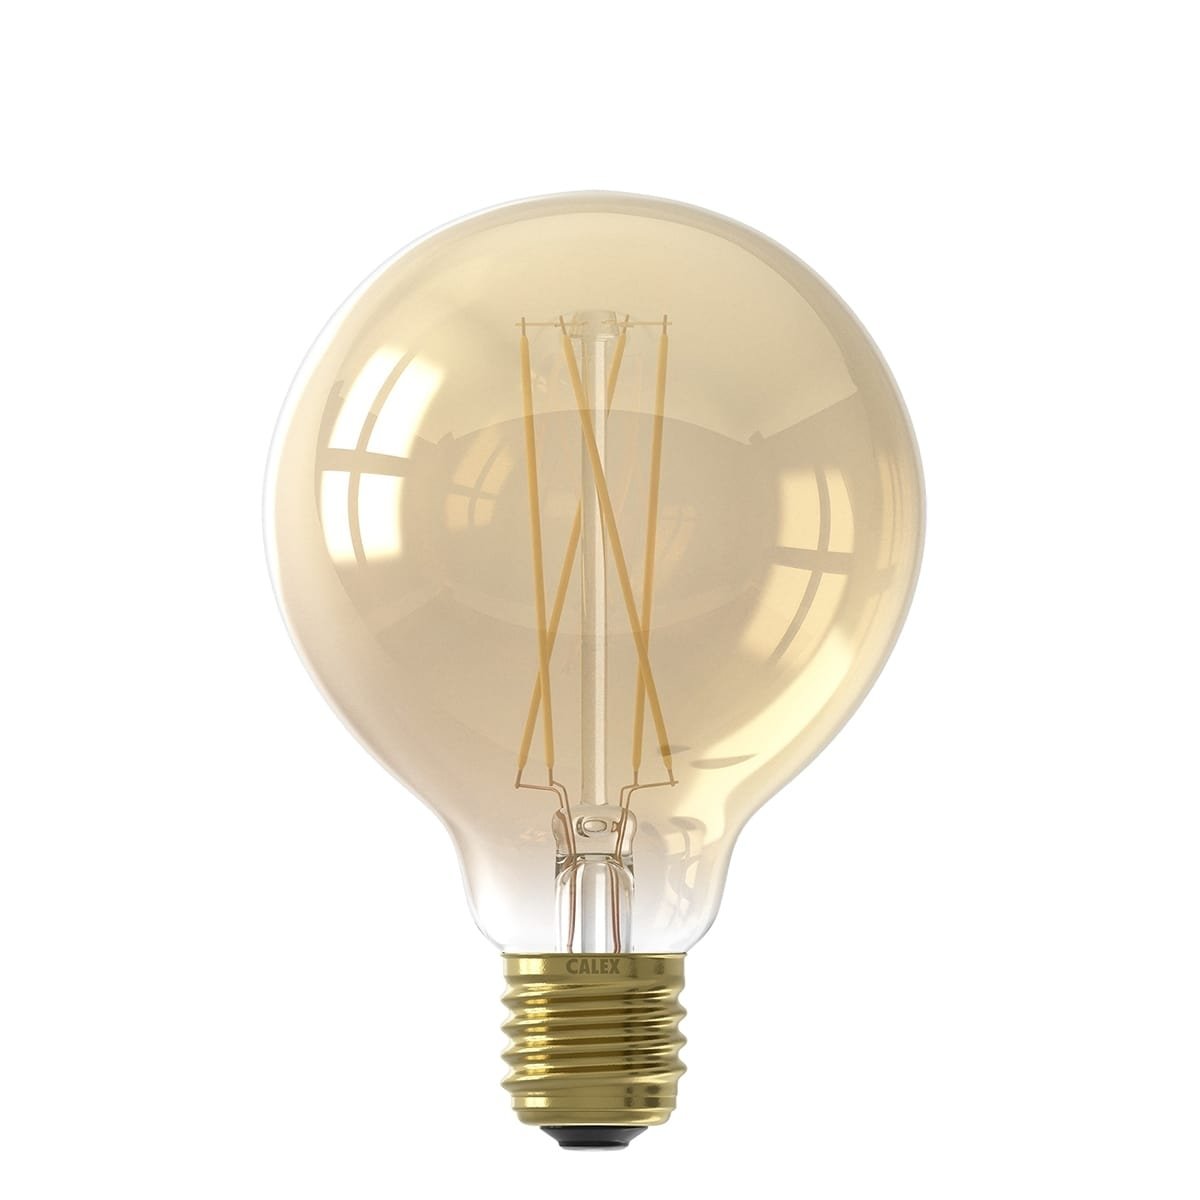 Outdoor Lighting Light Sources Led light source filament Globe Gold - 4W